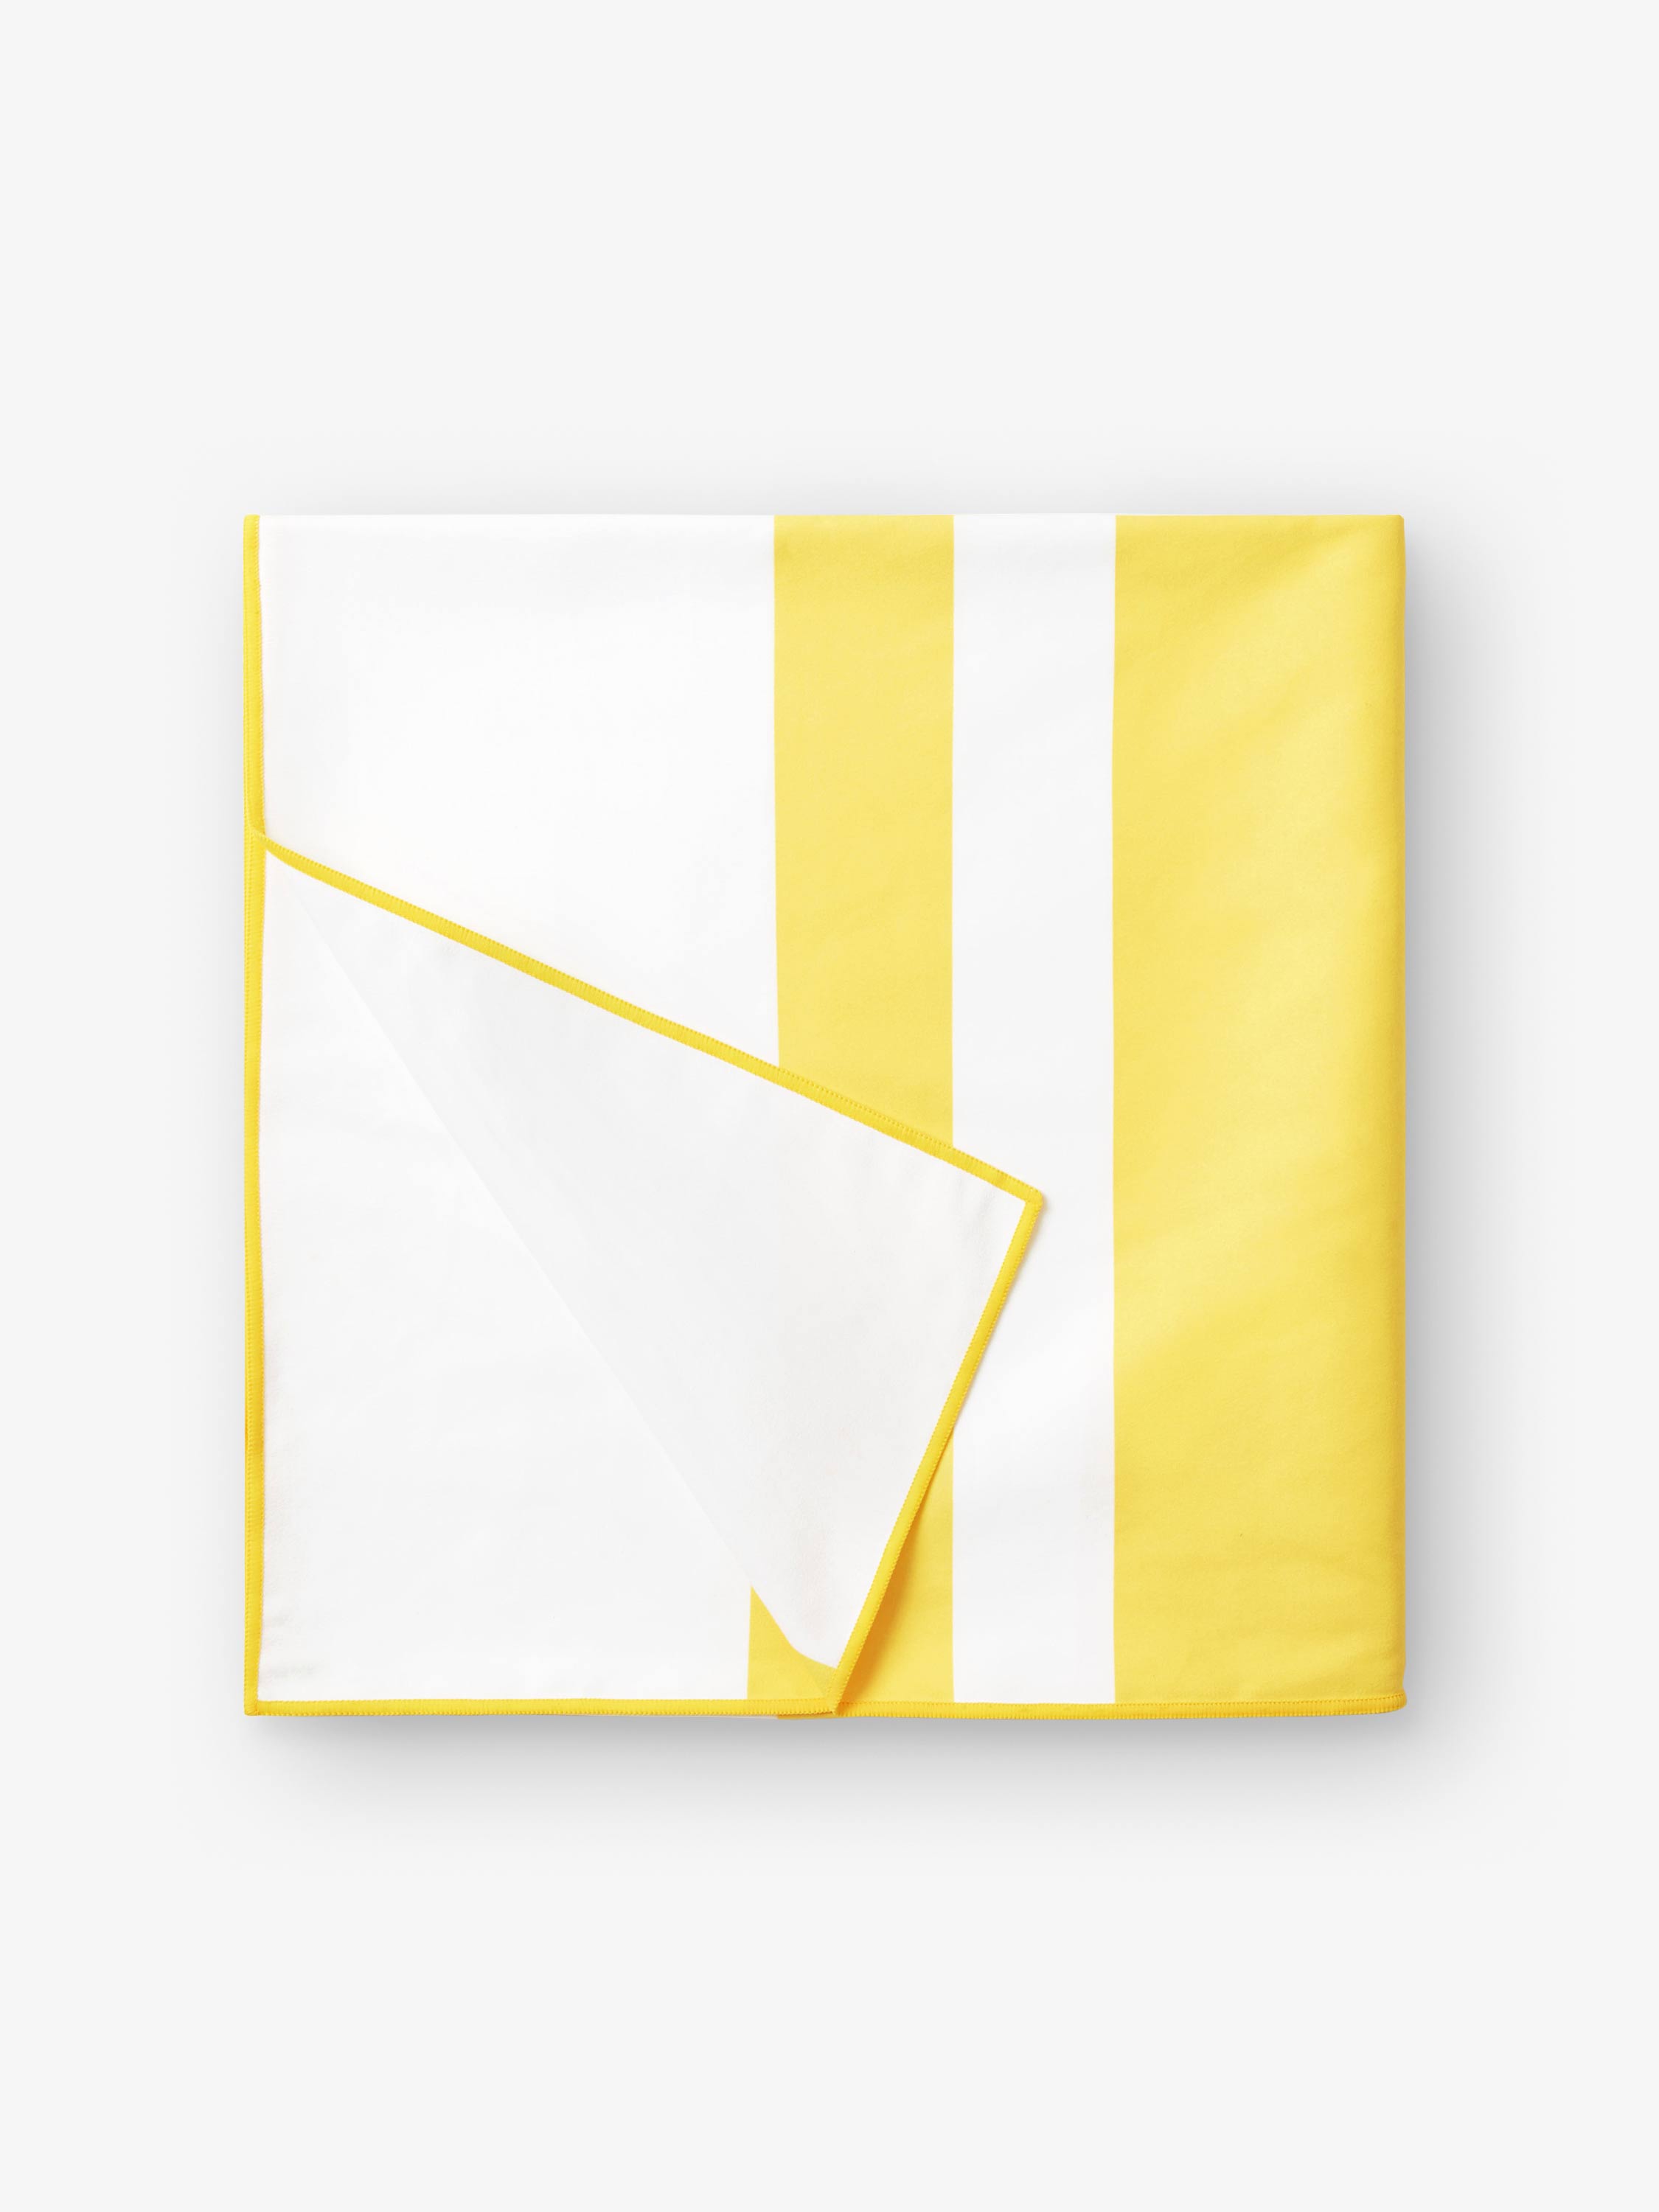 Mojave Yellow Microfiber Beach Towel by Laguna Beach Textile Company